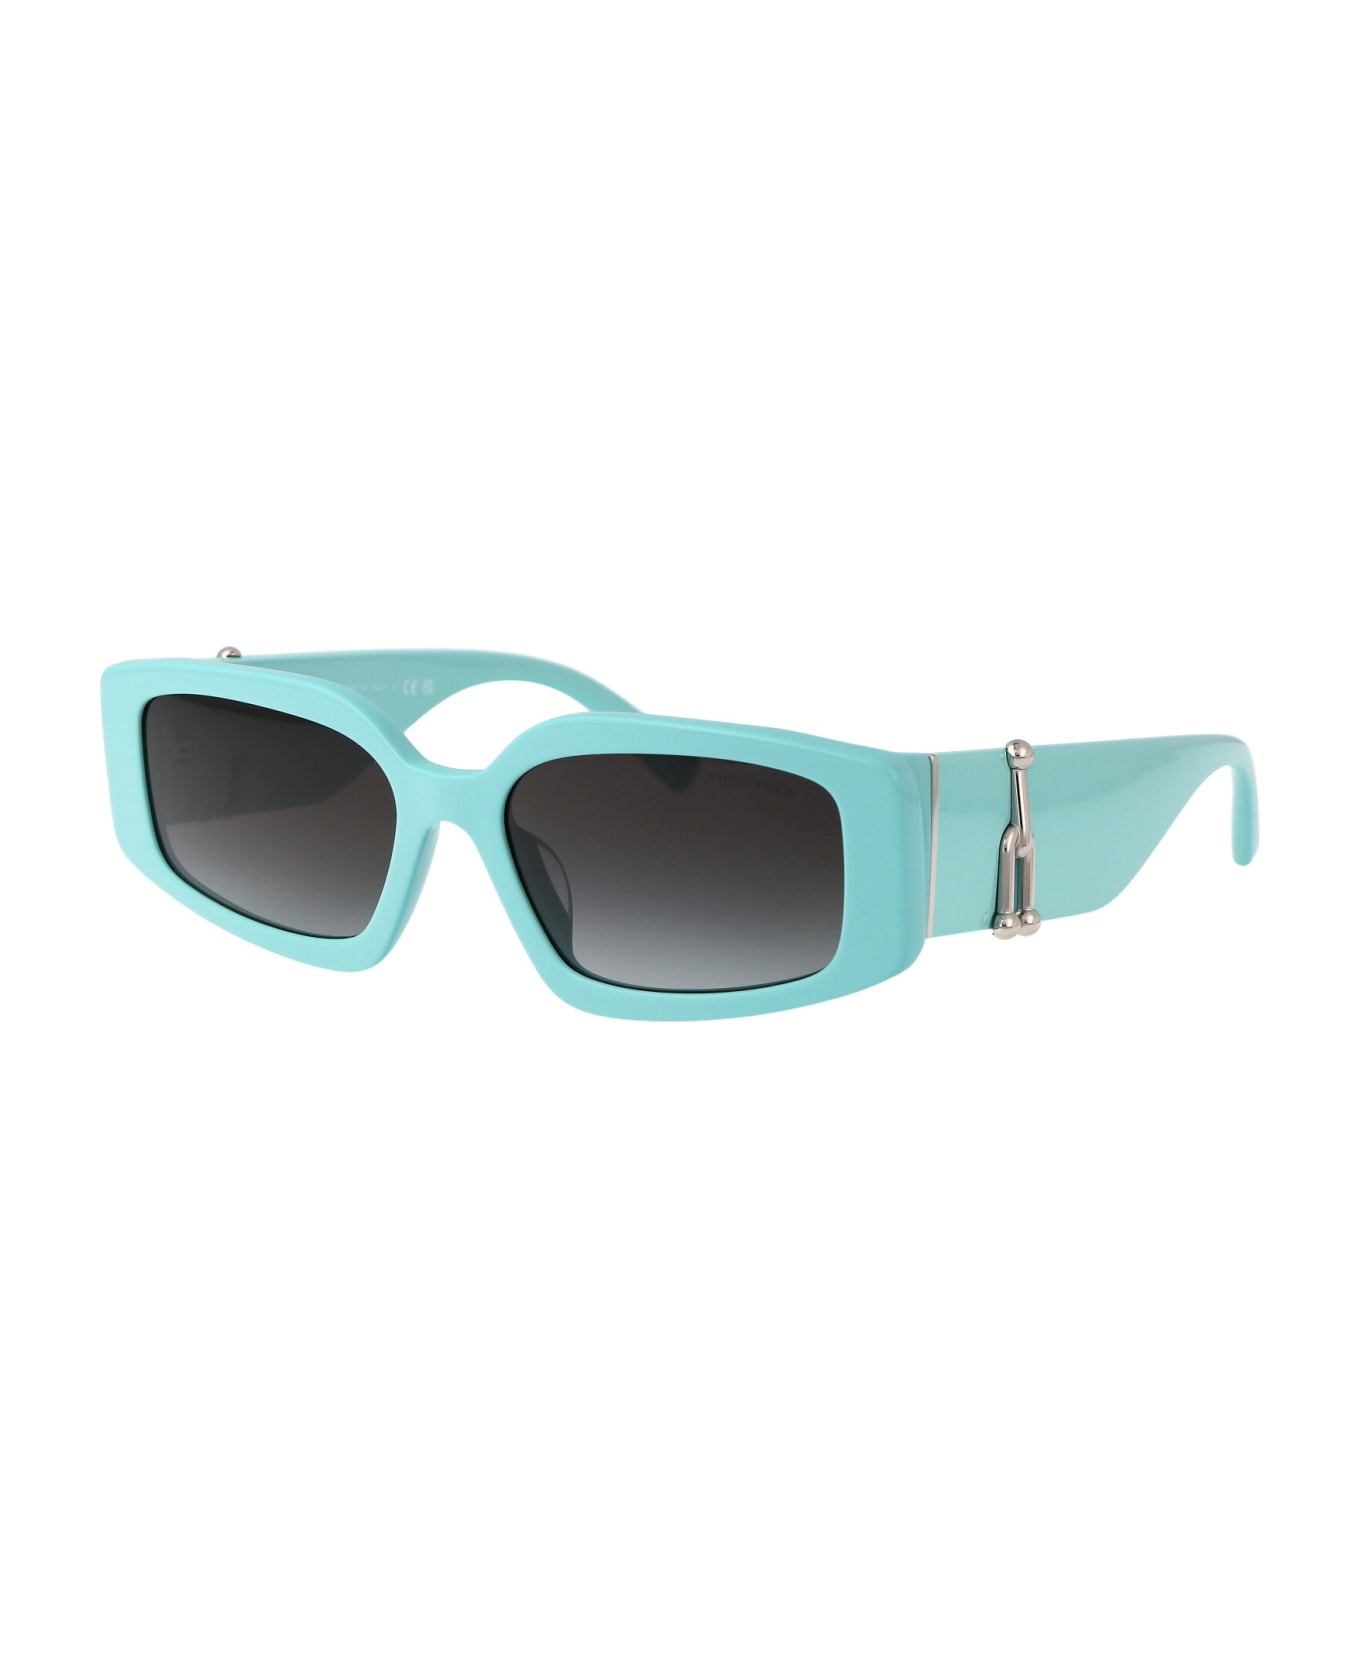 Tiffany & Co. 0tf4208u Sunglasses - 83883C Tiffany Blue